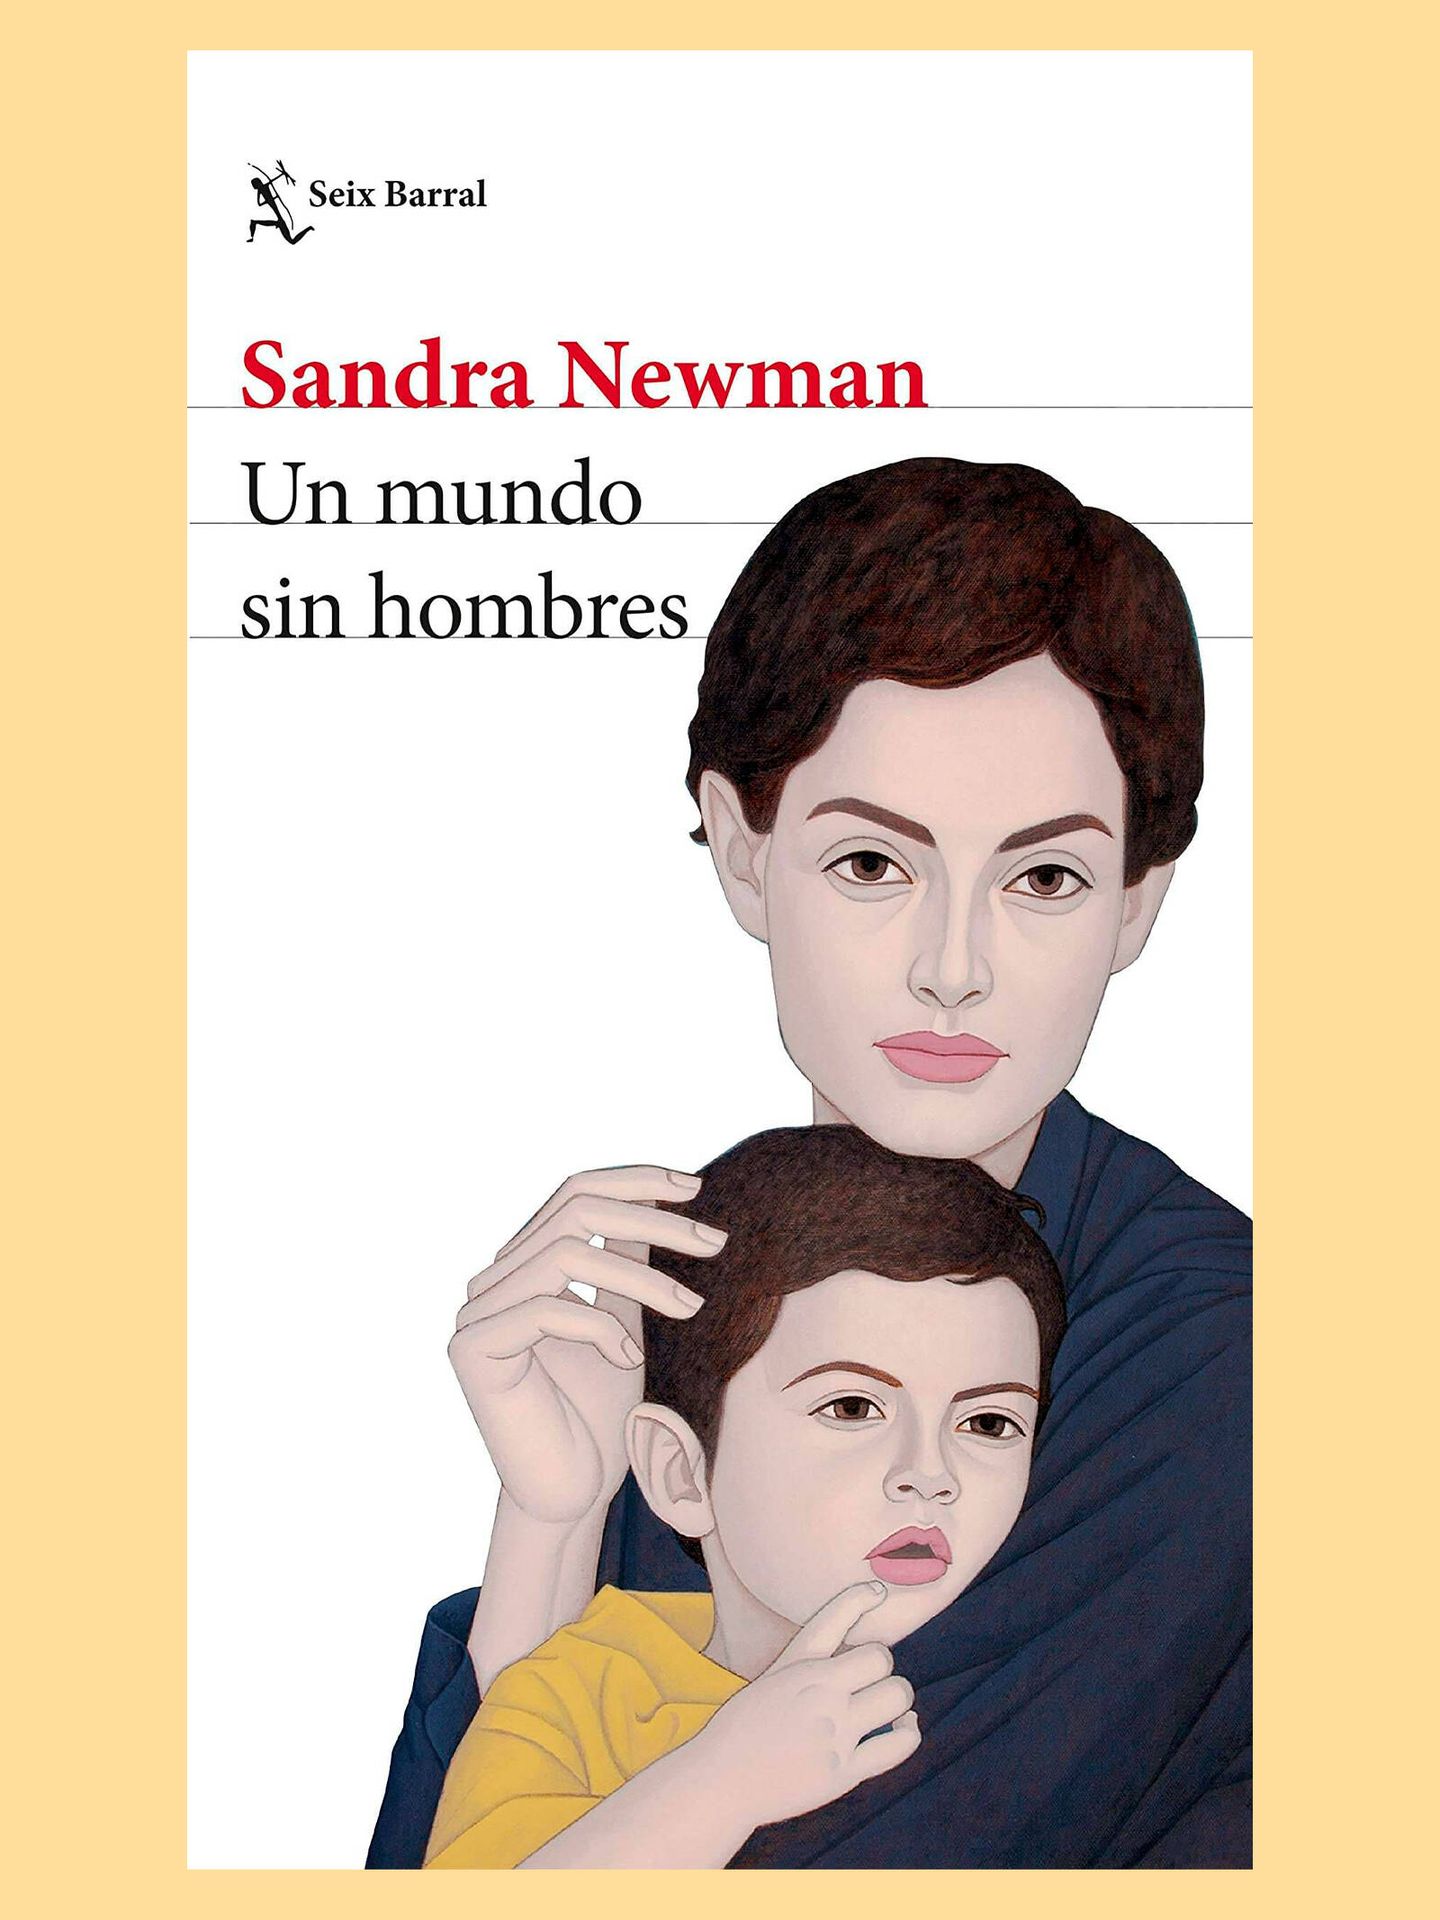 Portada de 'Un mundo sin hombres', de la escritora estadounidense Sandra Newman.